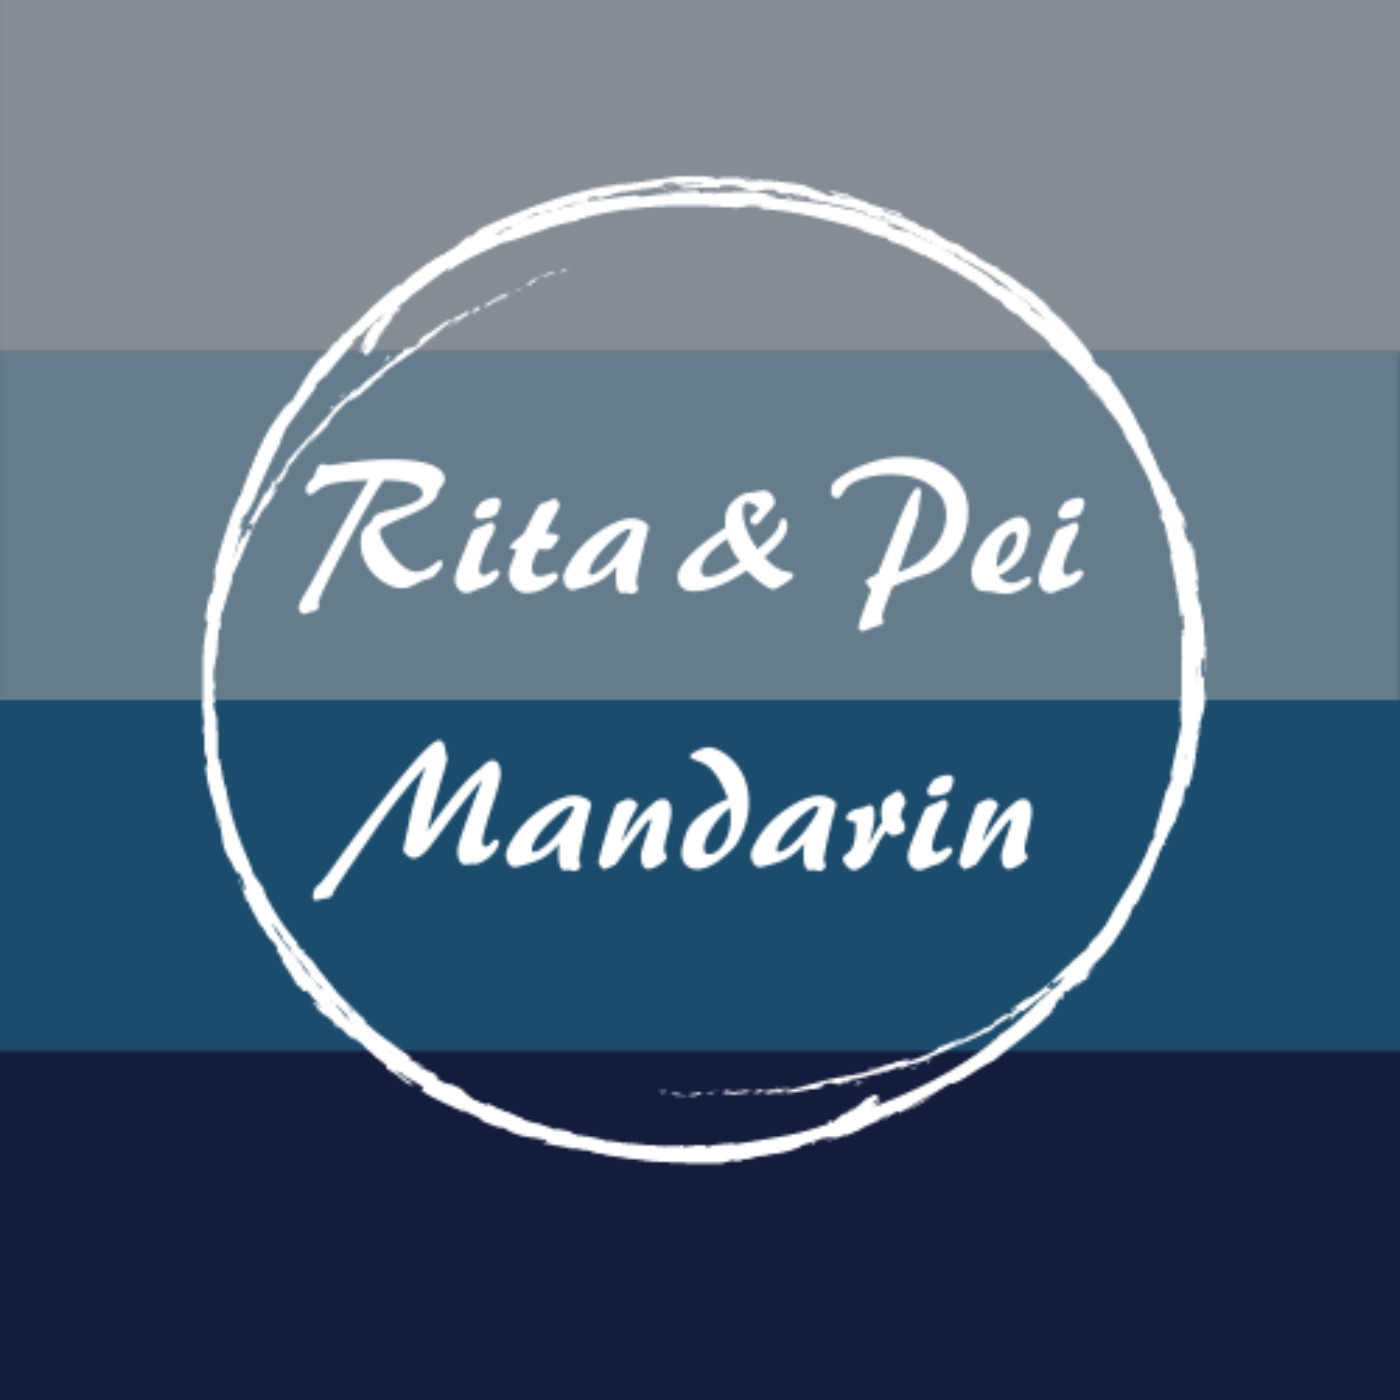 Rita and Pei Mandarin